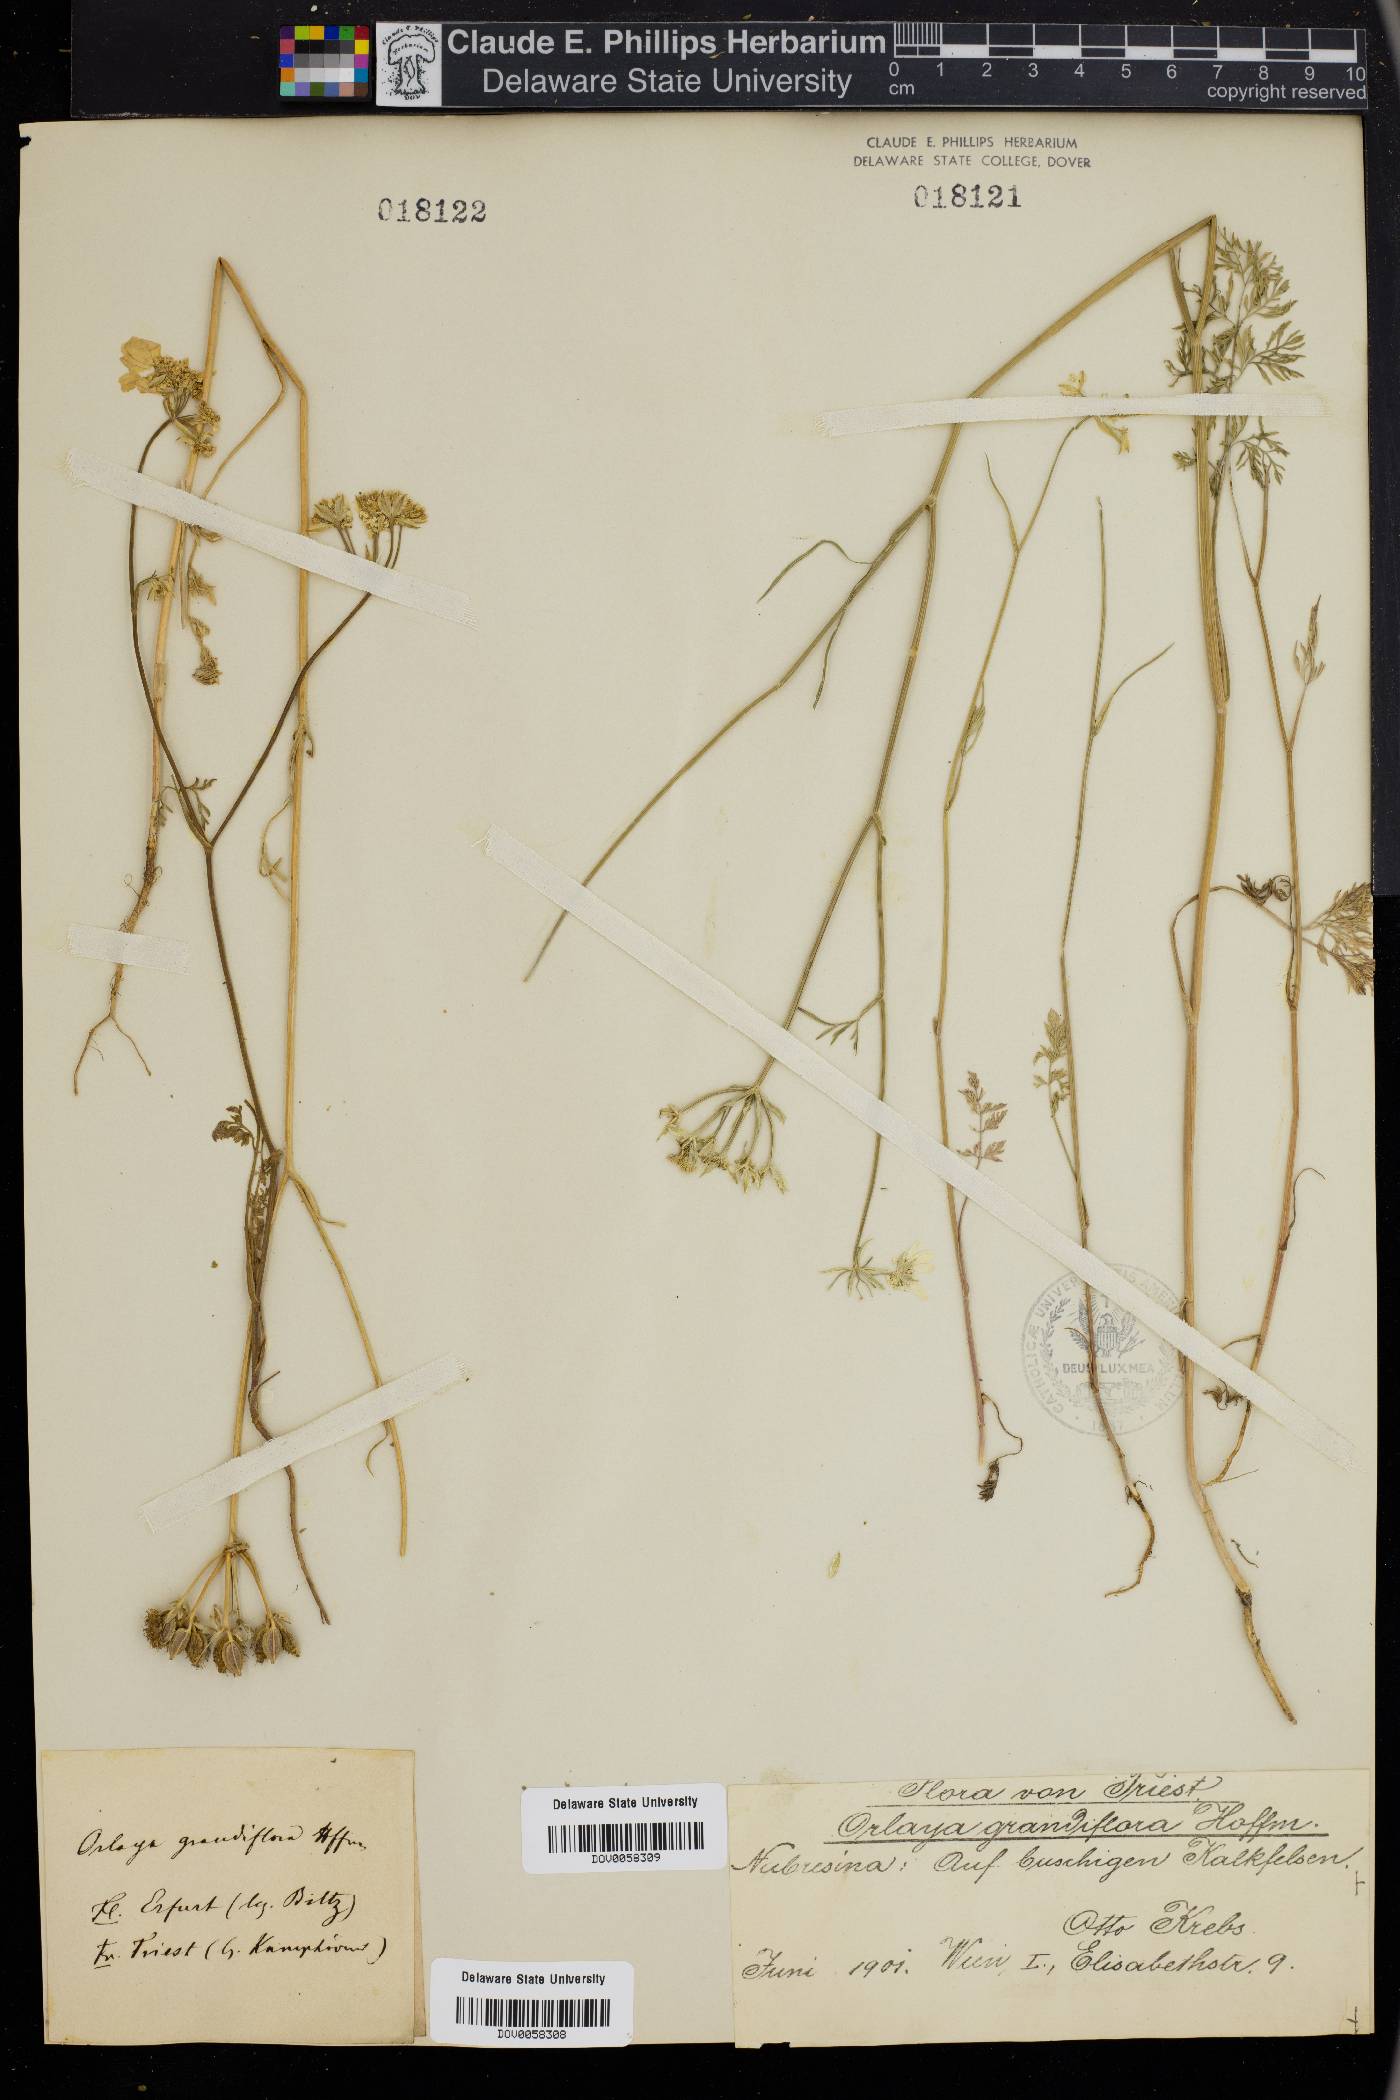 Orlaya grandiflora image